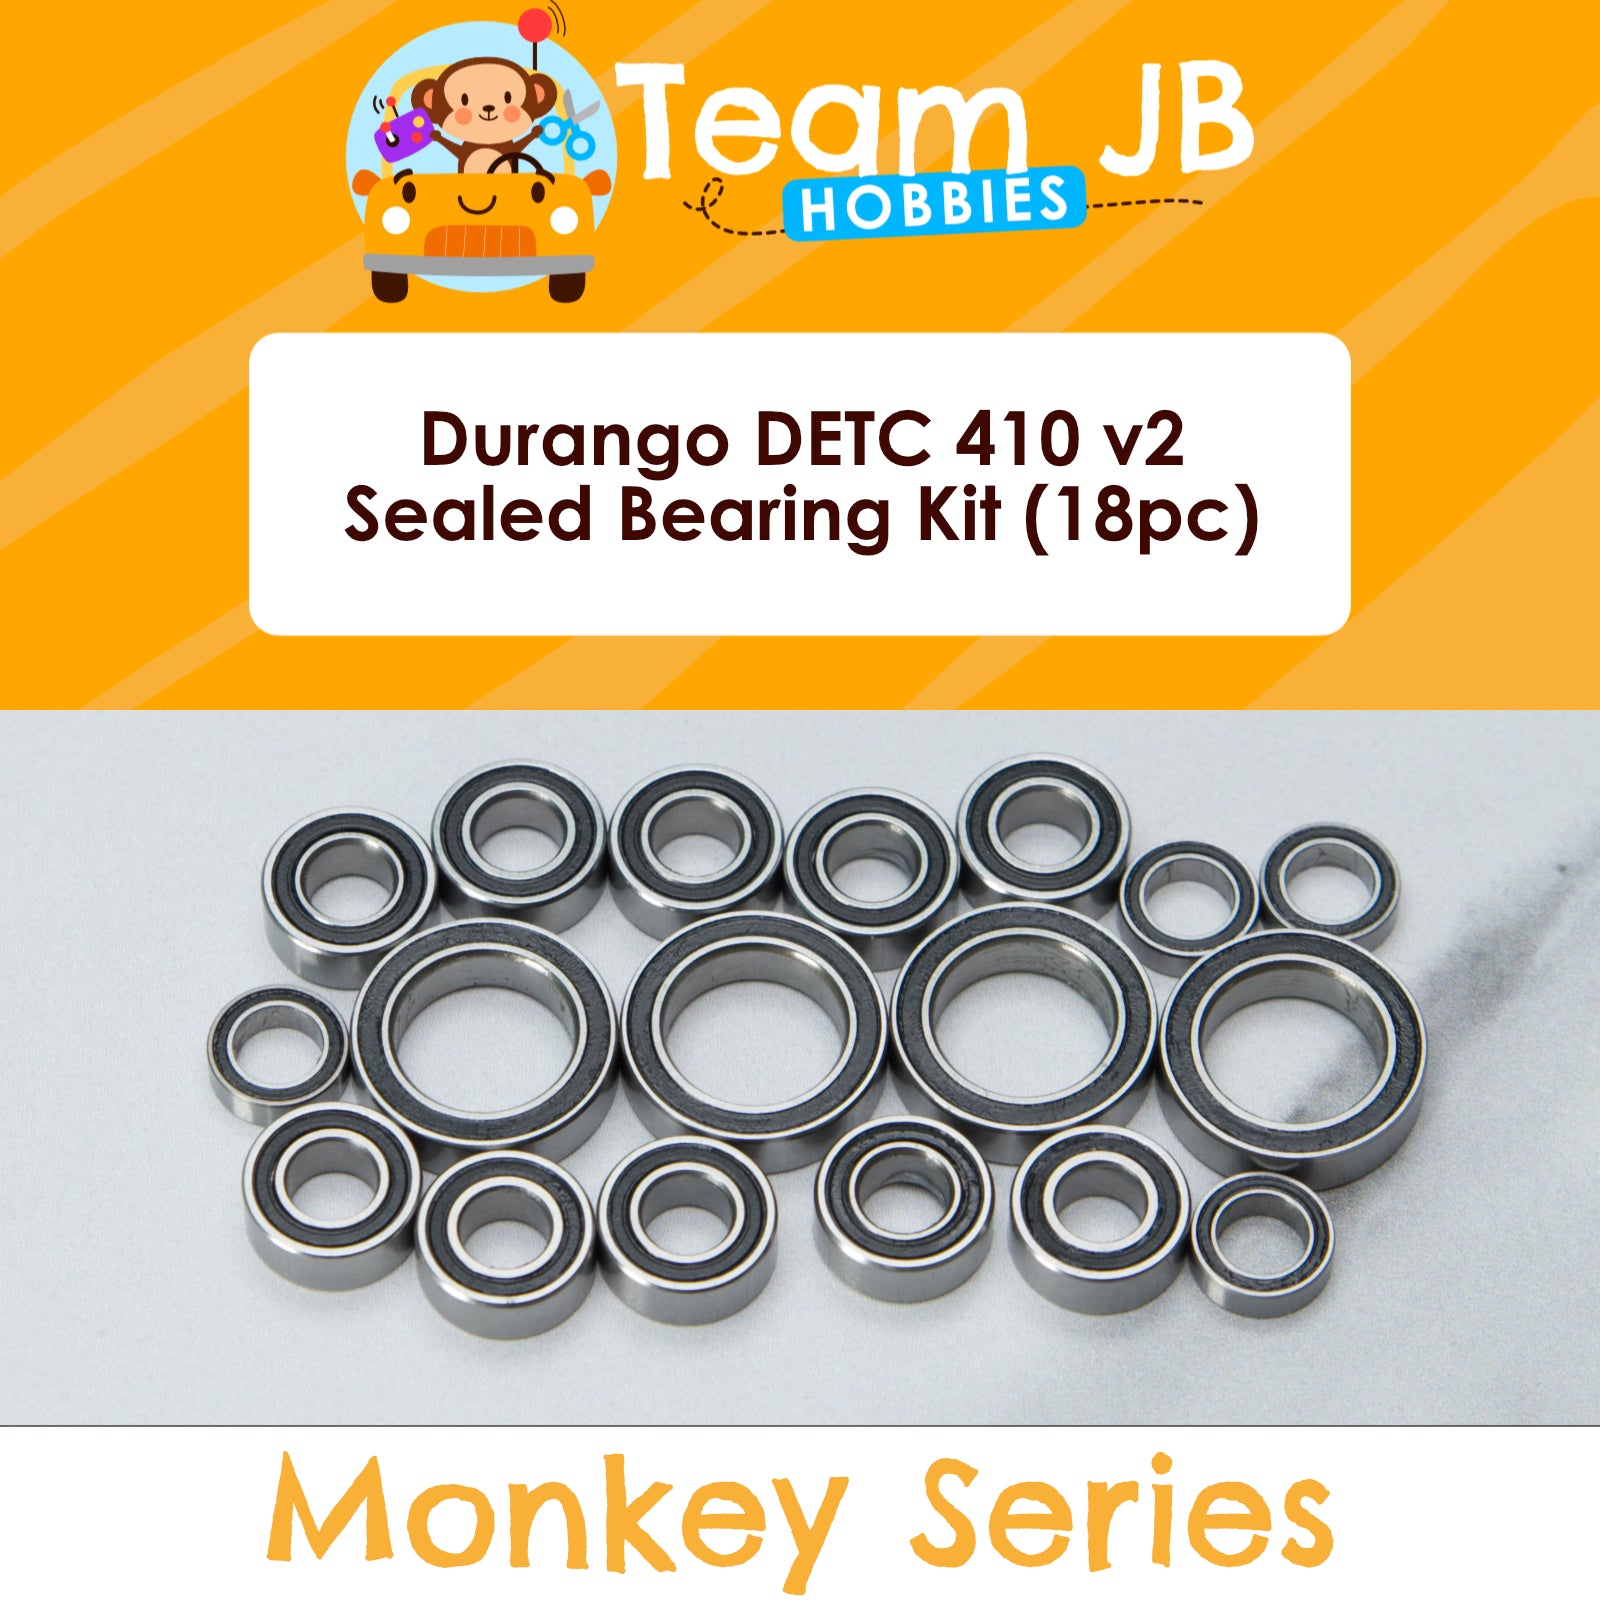 Durango DETC 410 v2 - Sealed Bearing Kit